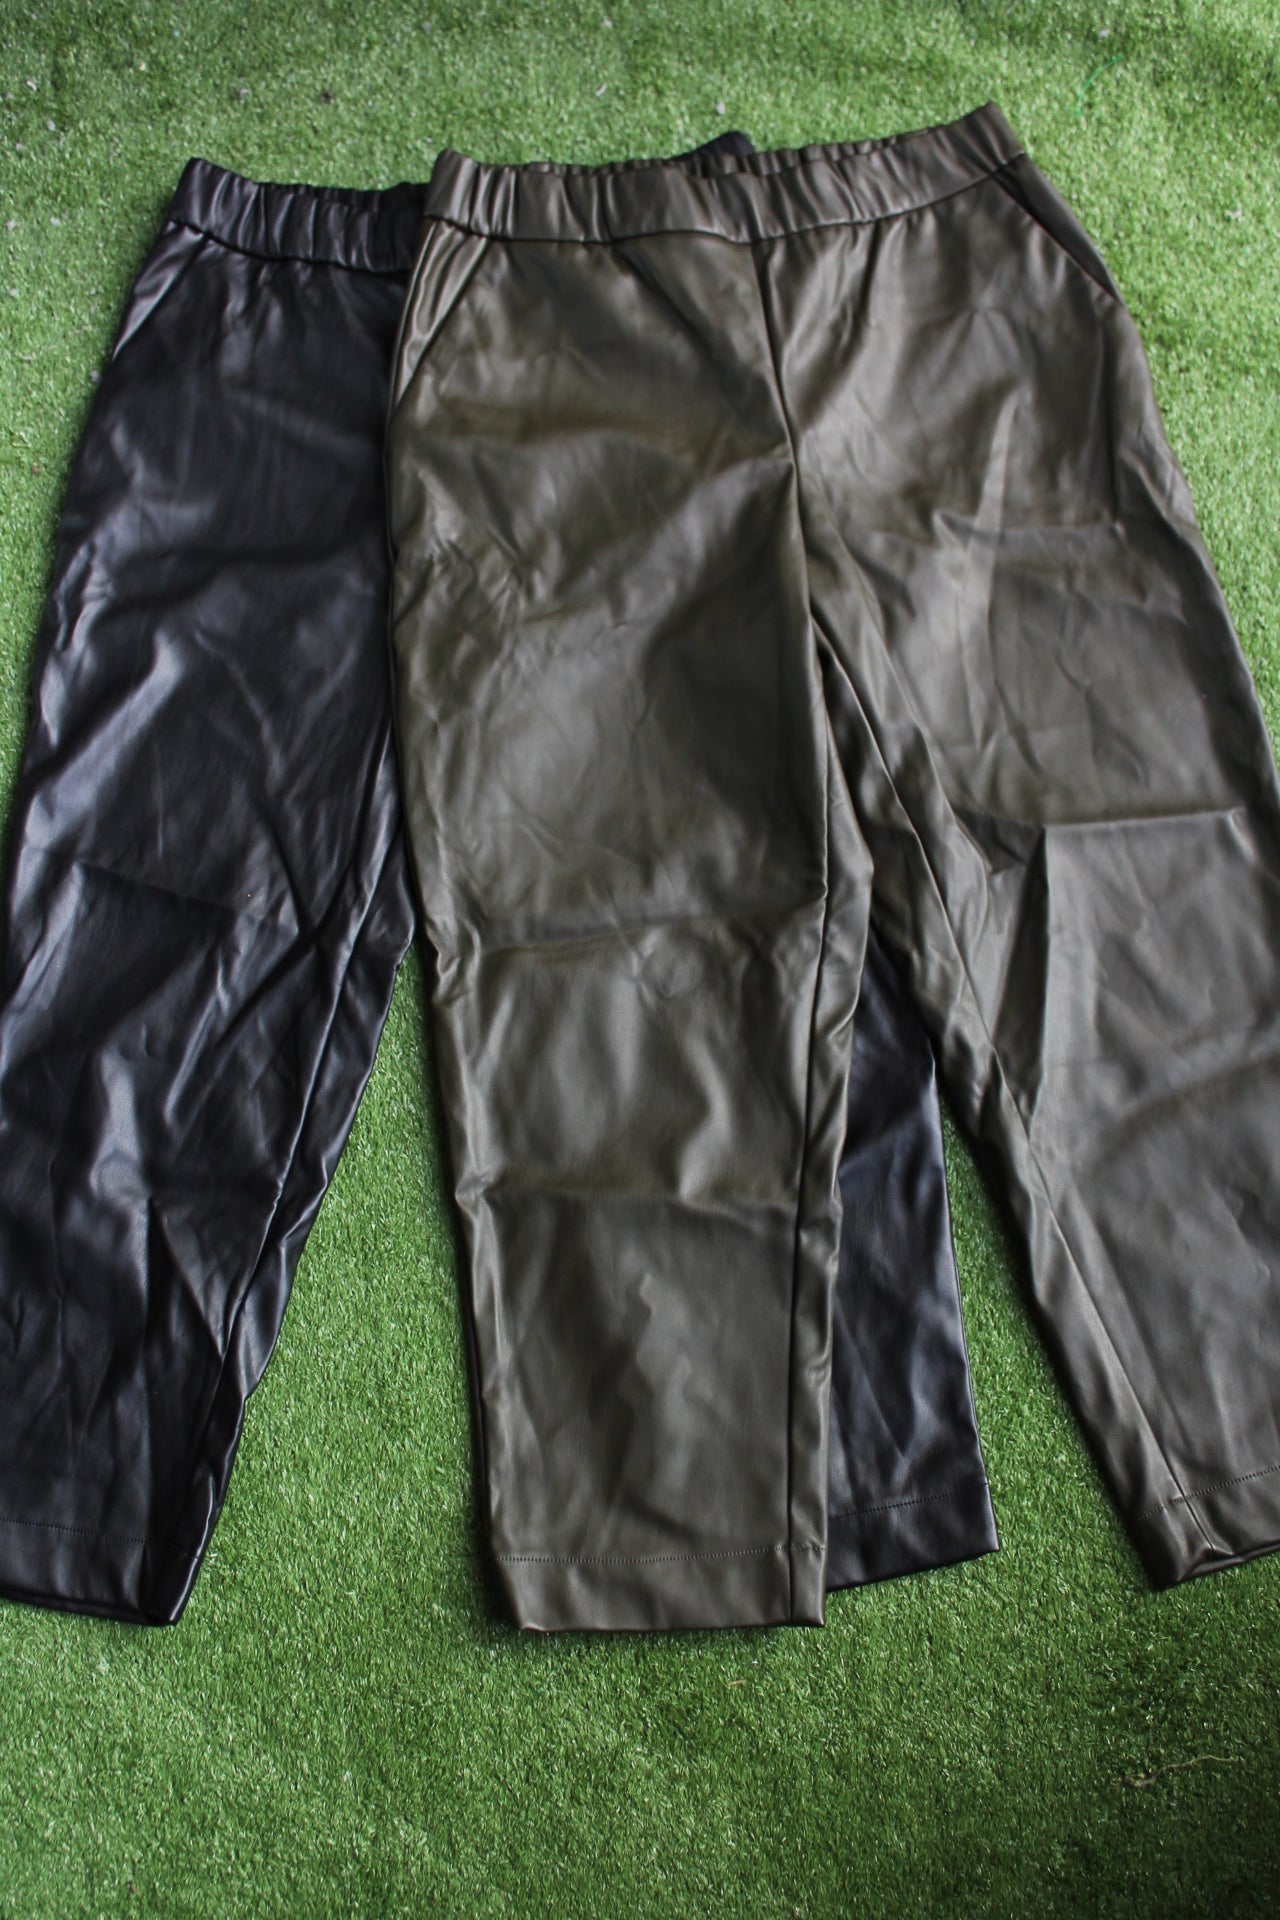 Black leather capri pants. A New Day (Large)